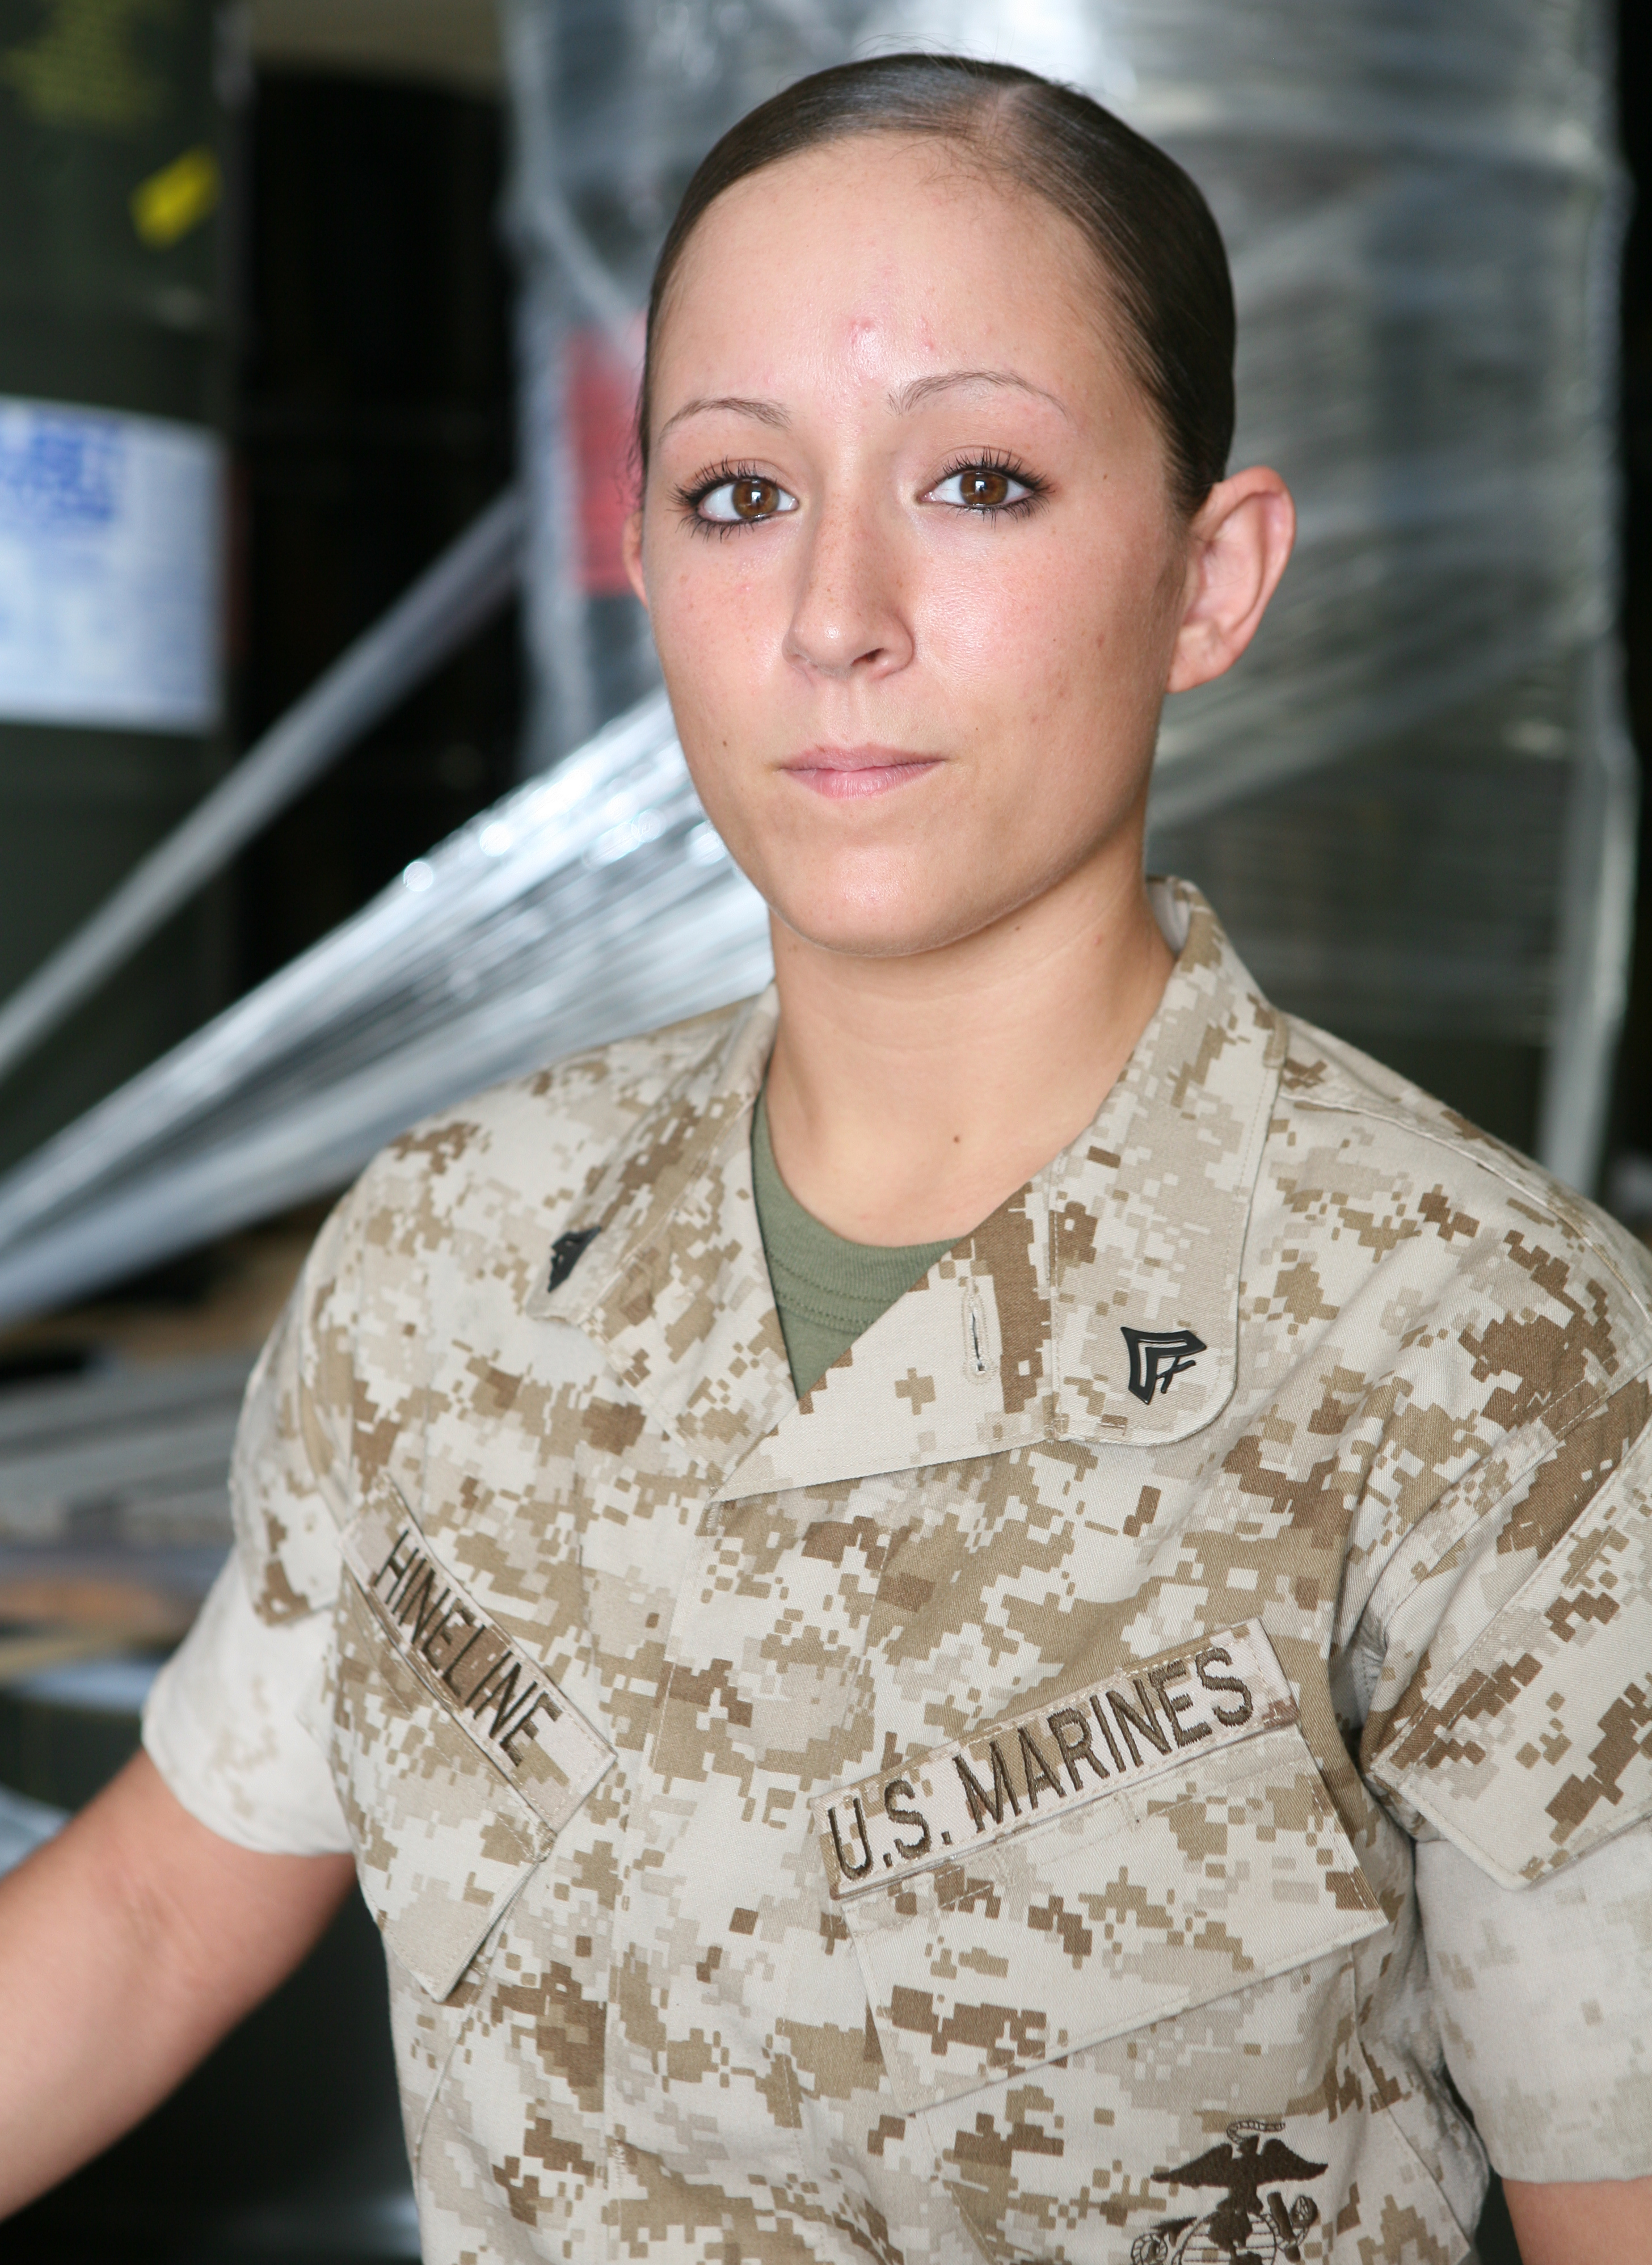 Us marines female Women in